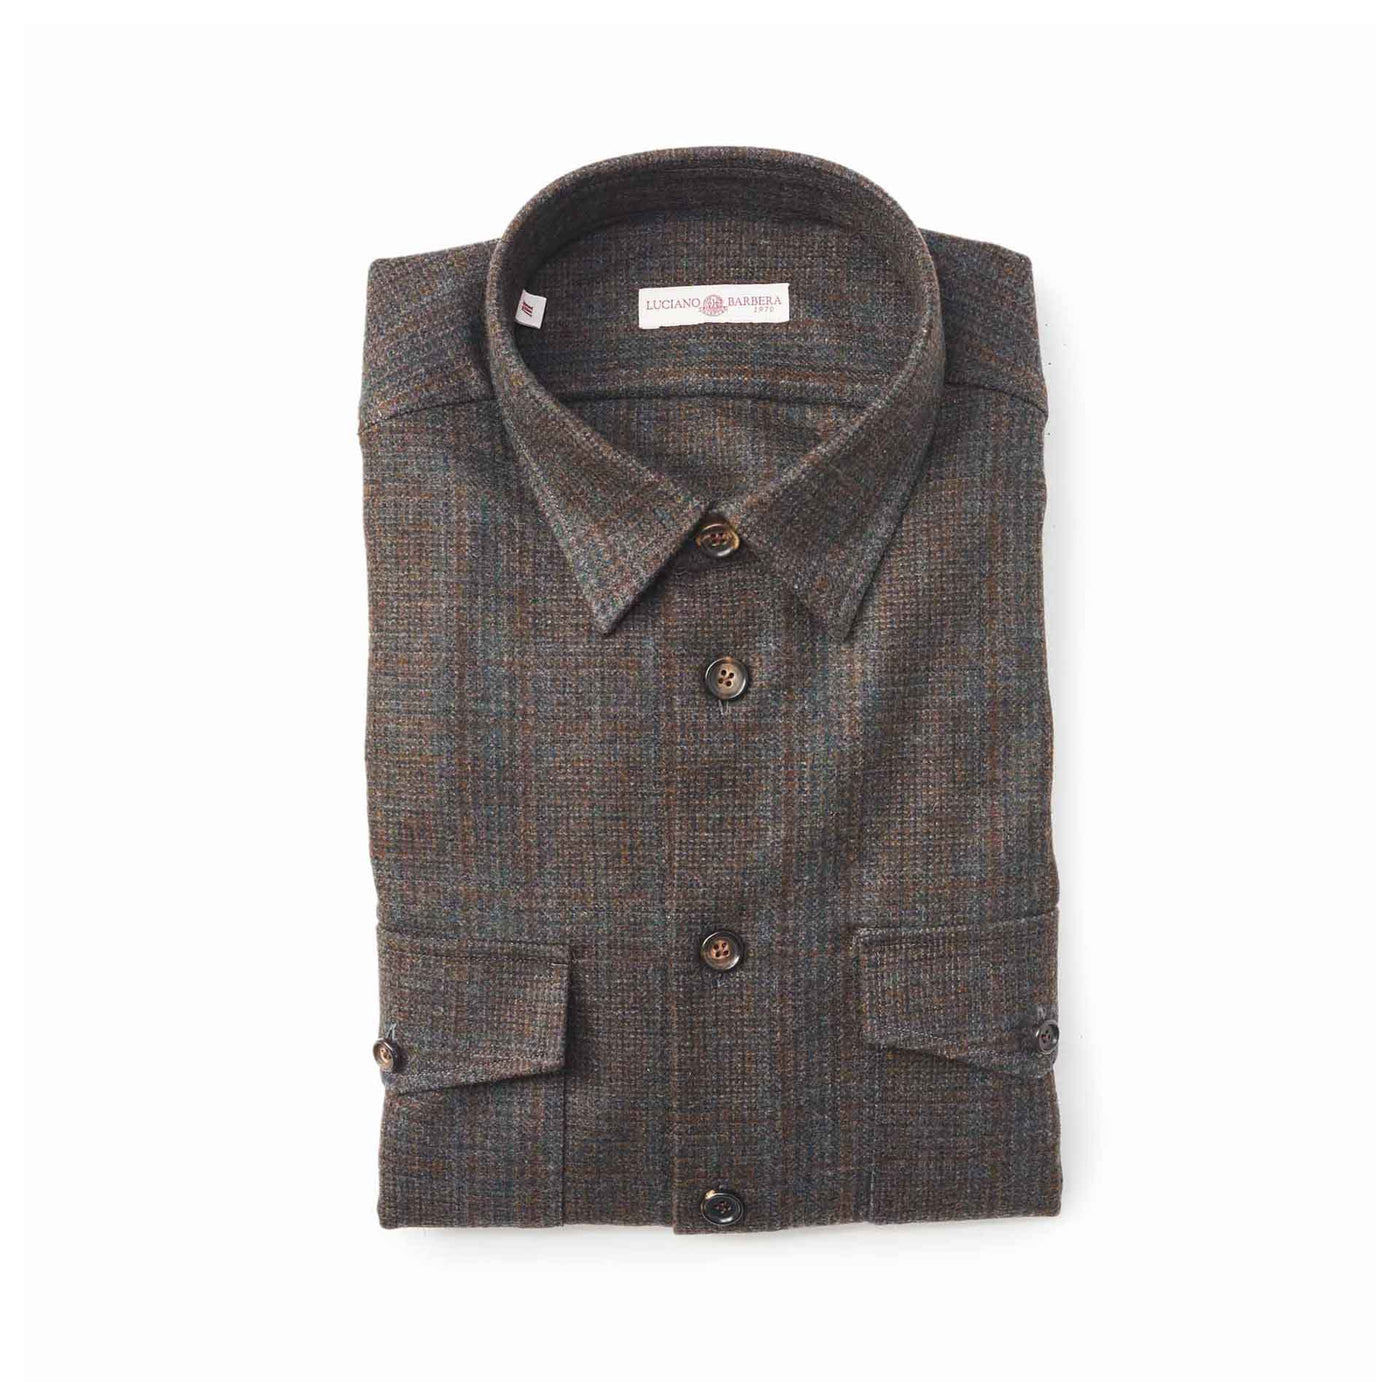 Men's Woven Shirt - Brown Glenplaid